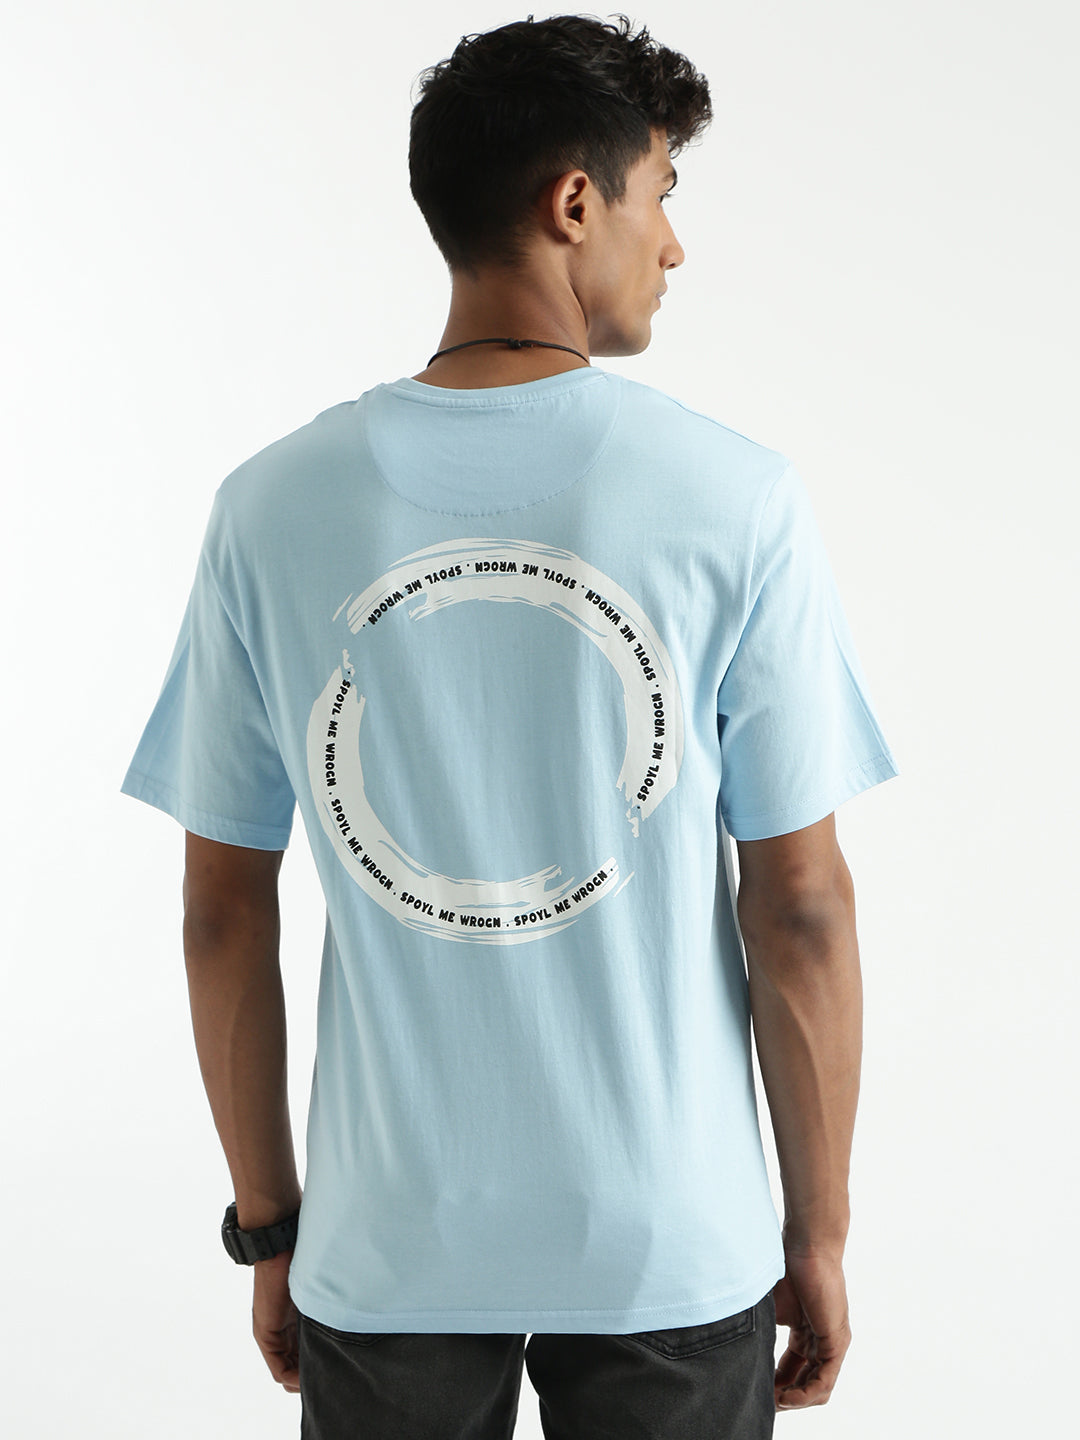 Wrogn X Spoyl Blue T-Shirt